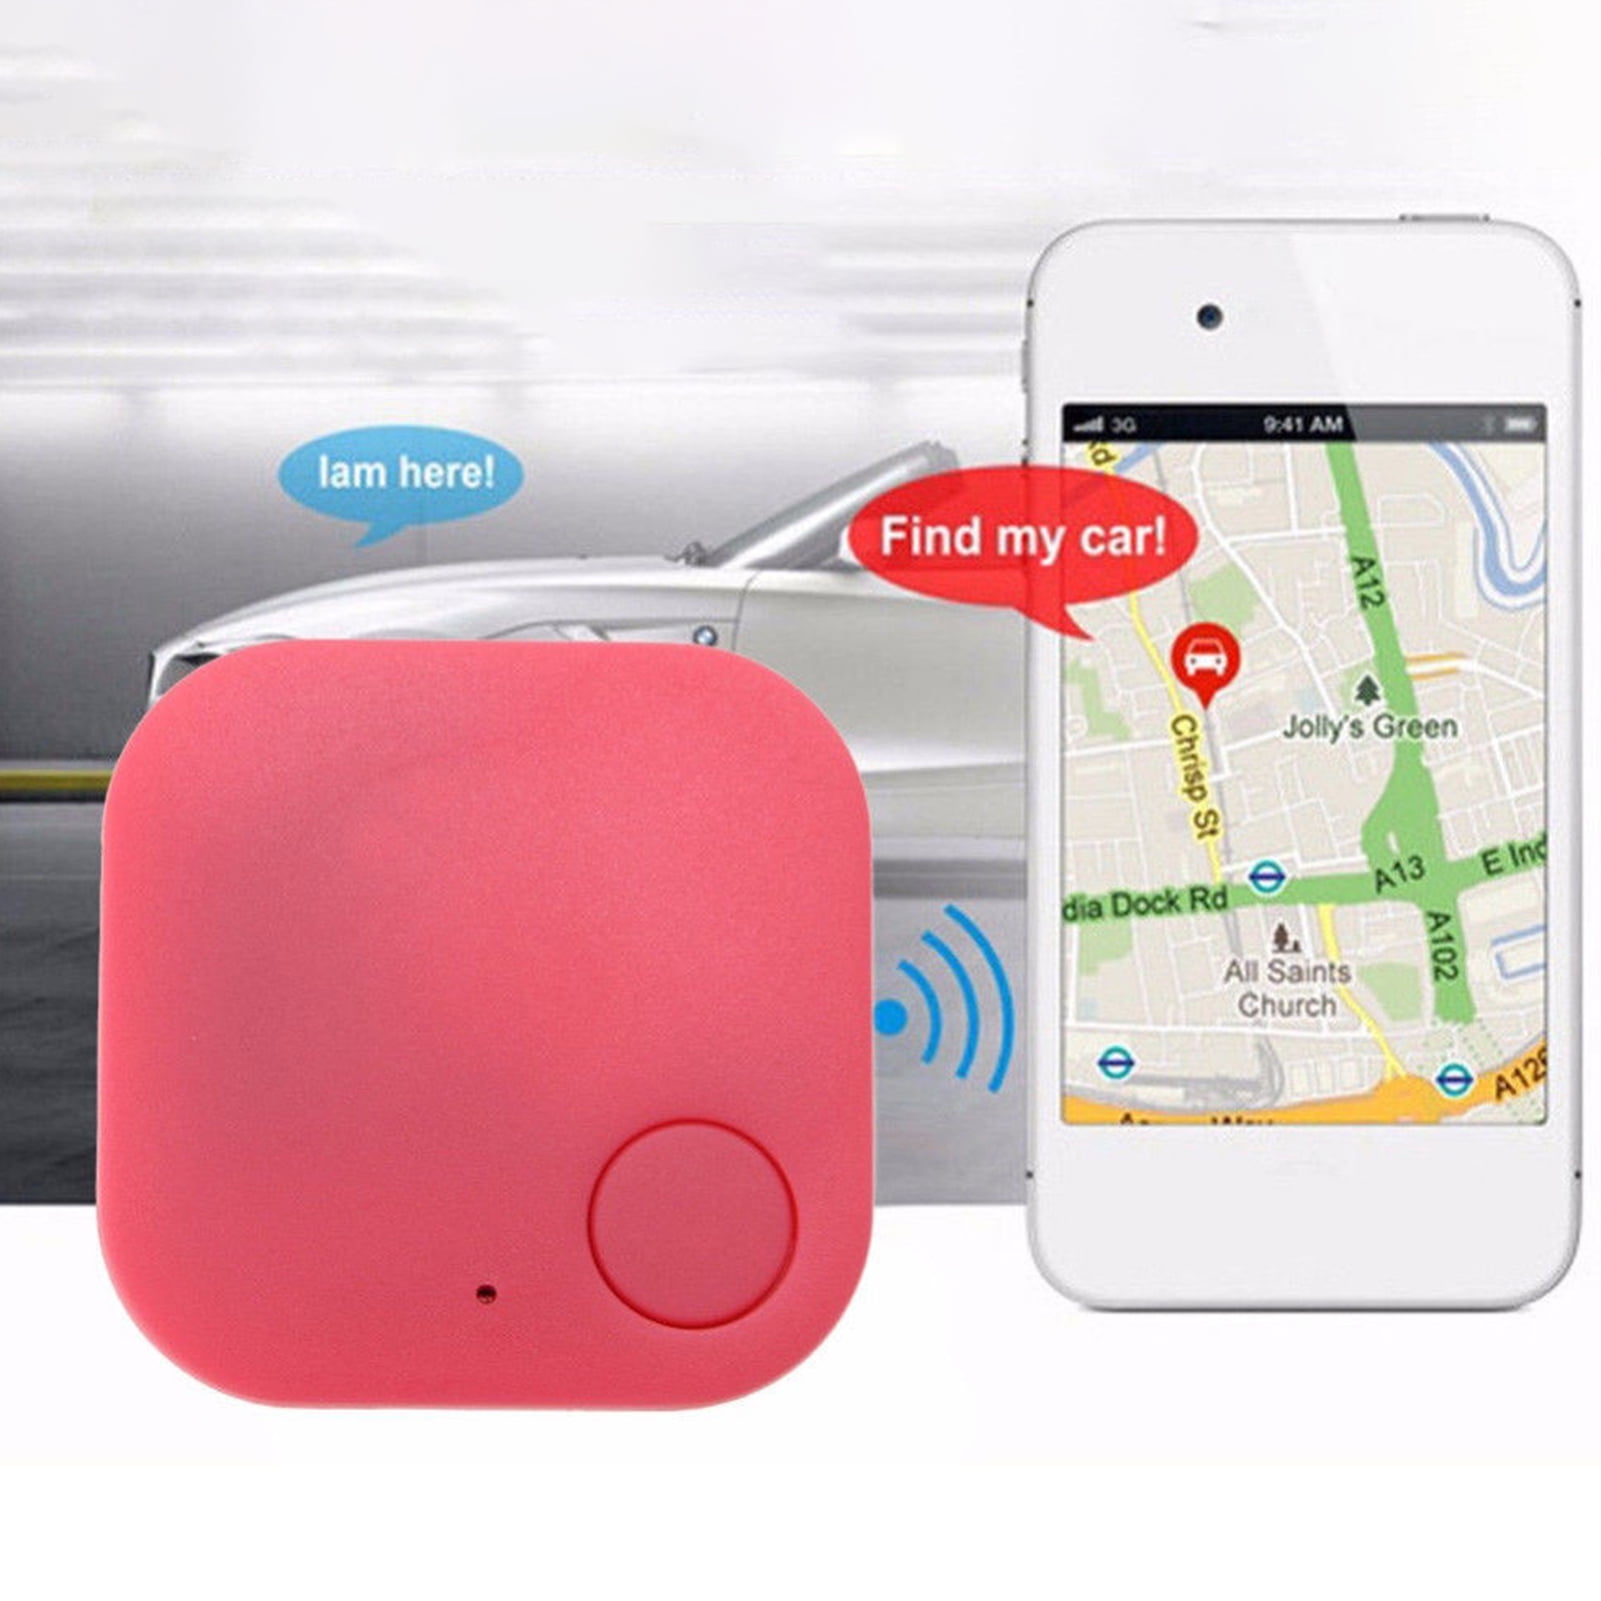 BianchiPatricia Smart Wireless 4.0 Key Anti Lost Finder iTag Tracker Alarm GPS Locator